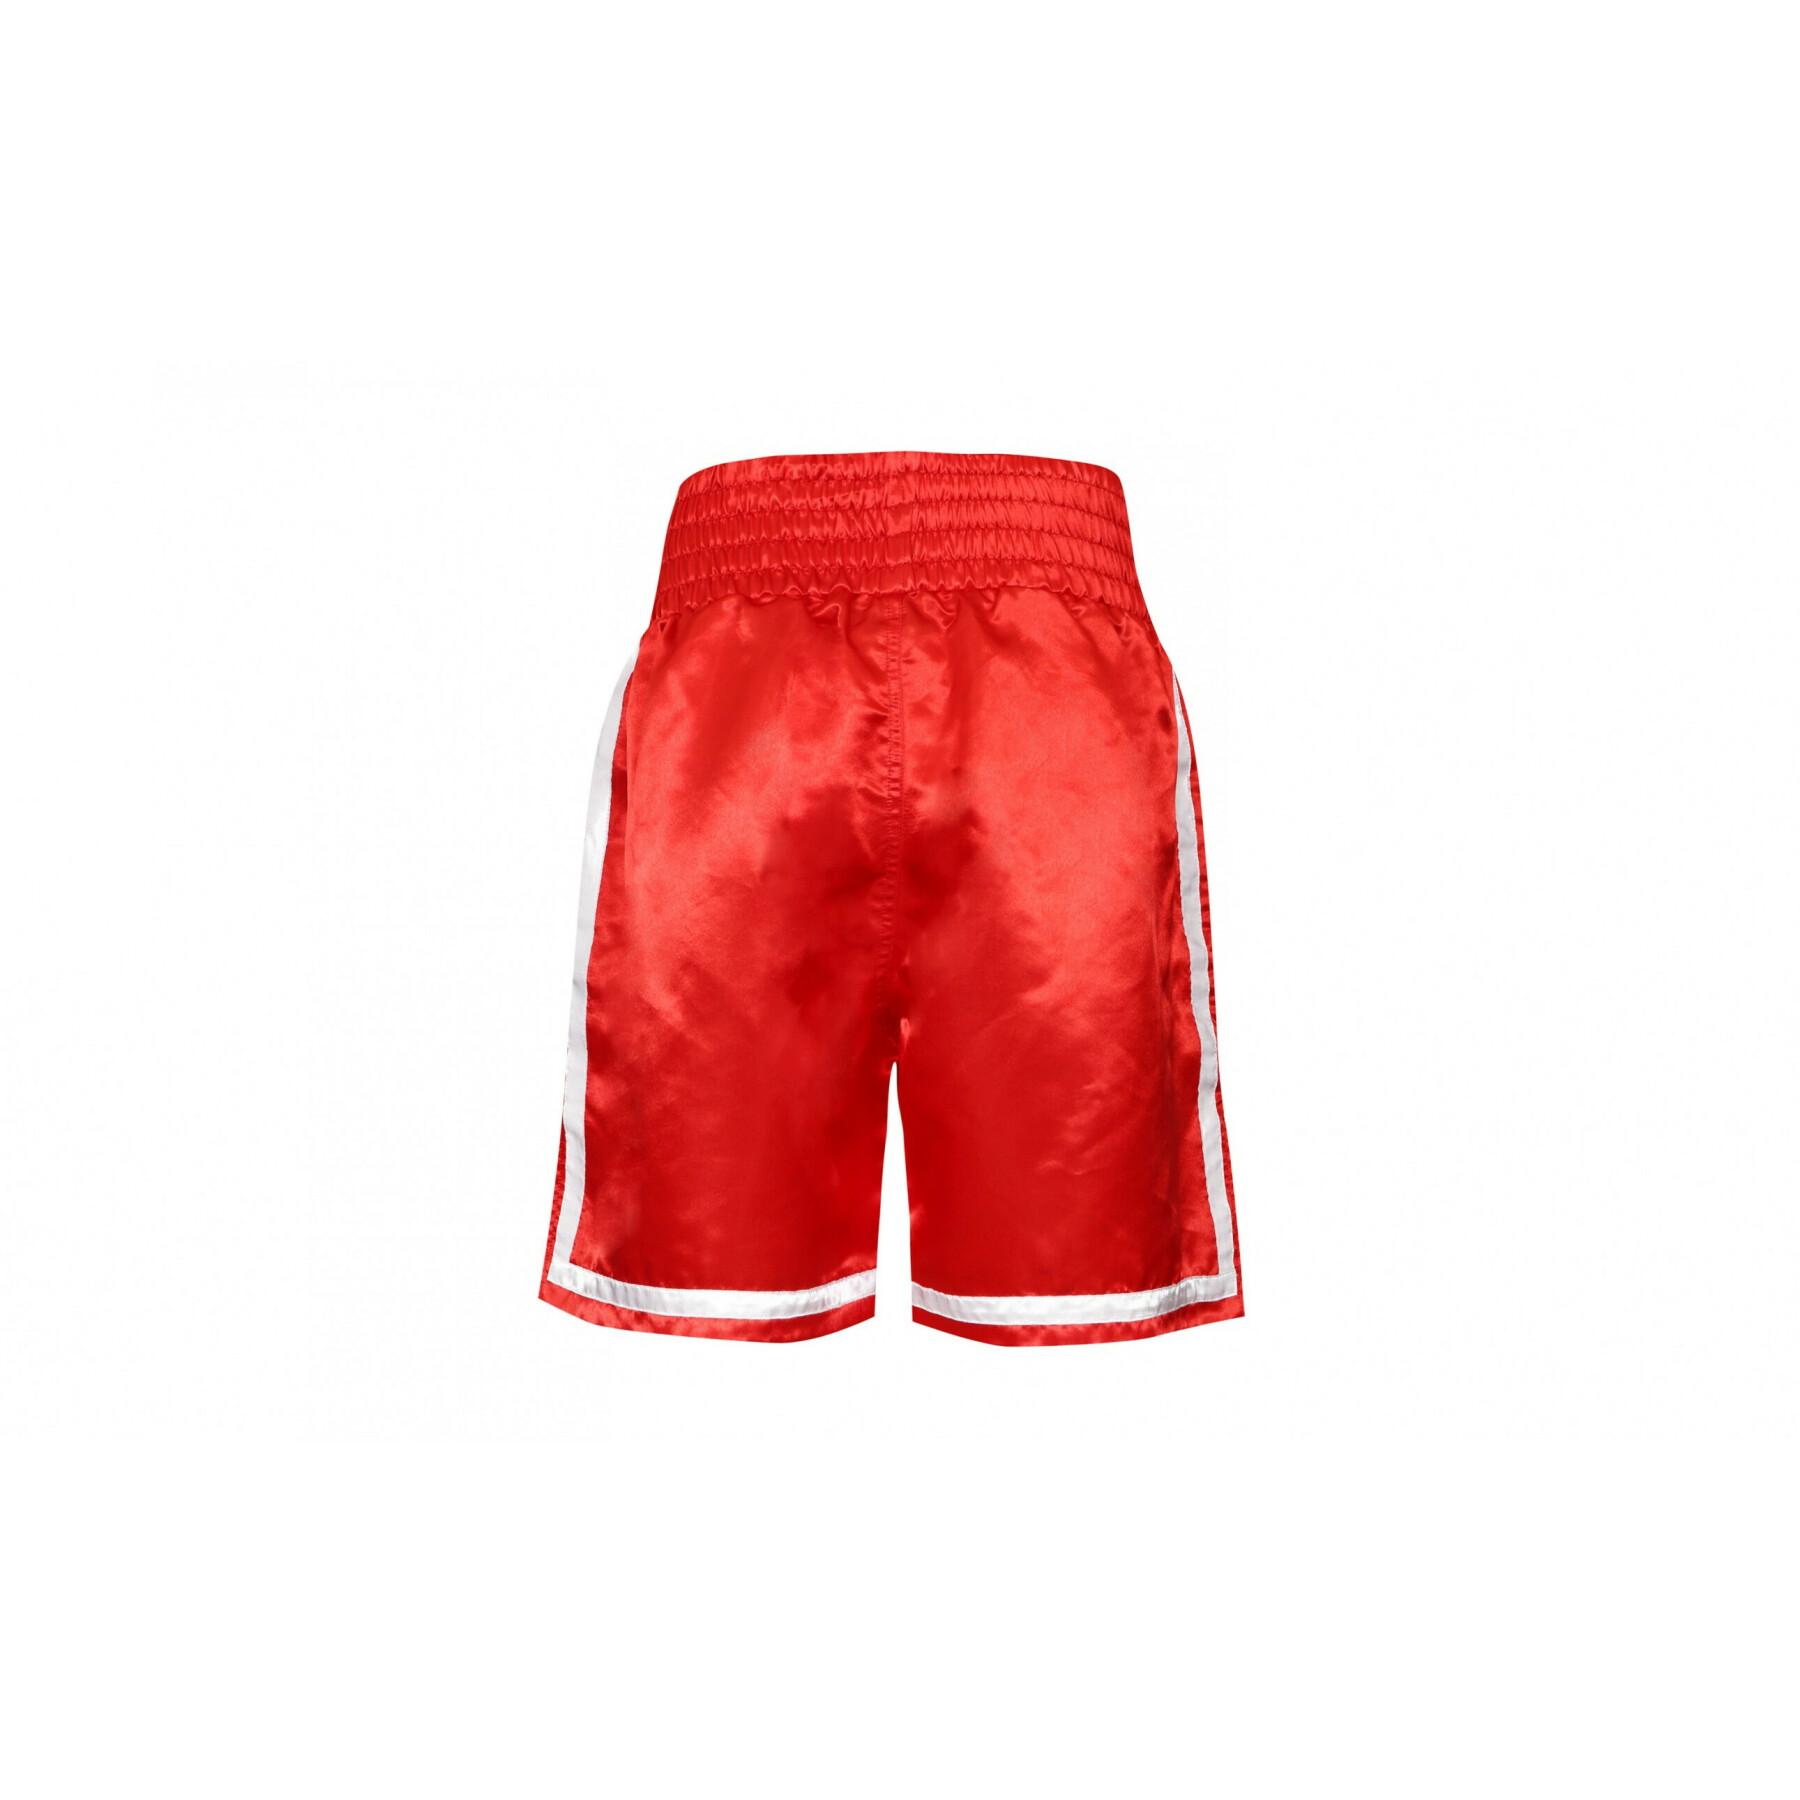 Boxing shorts Everlast